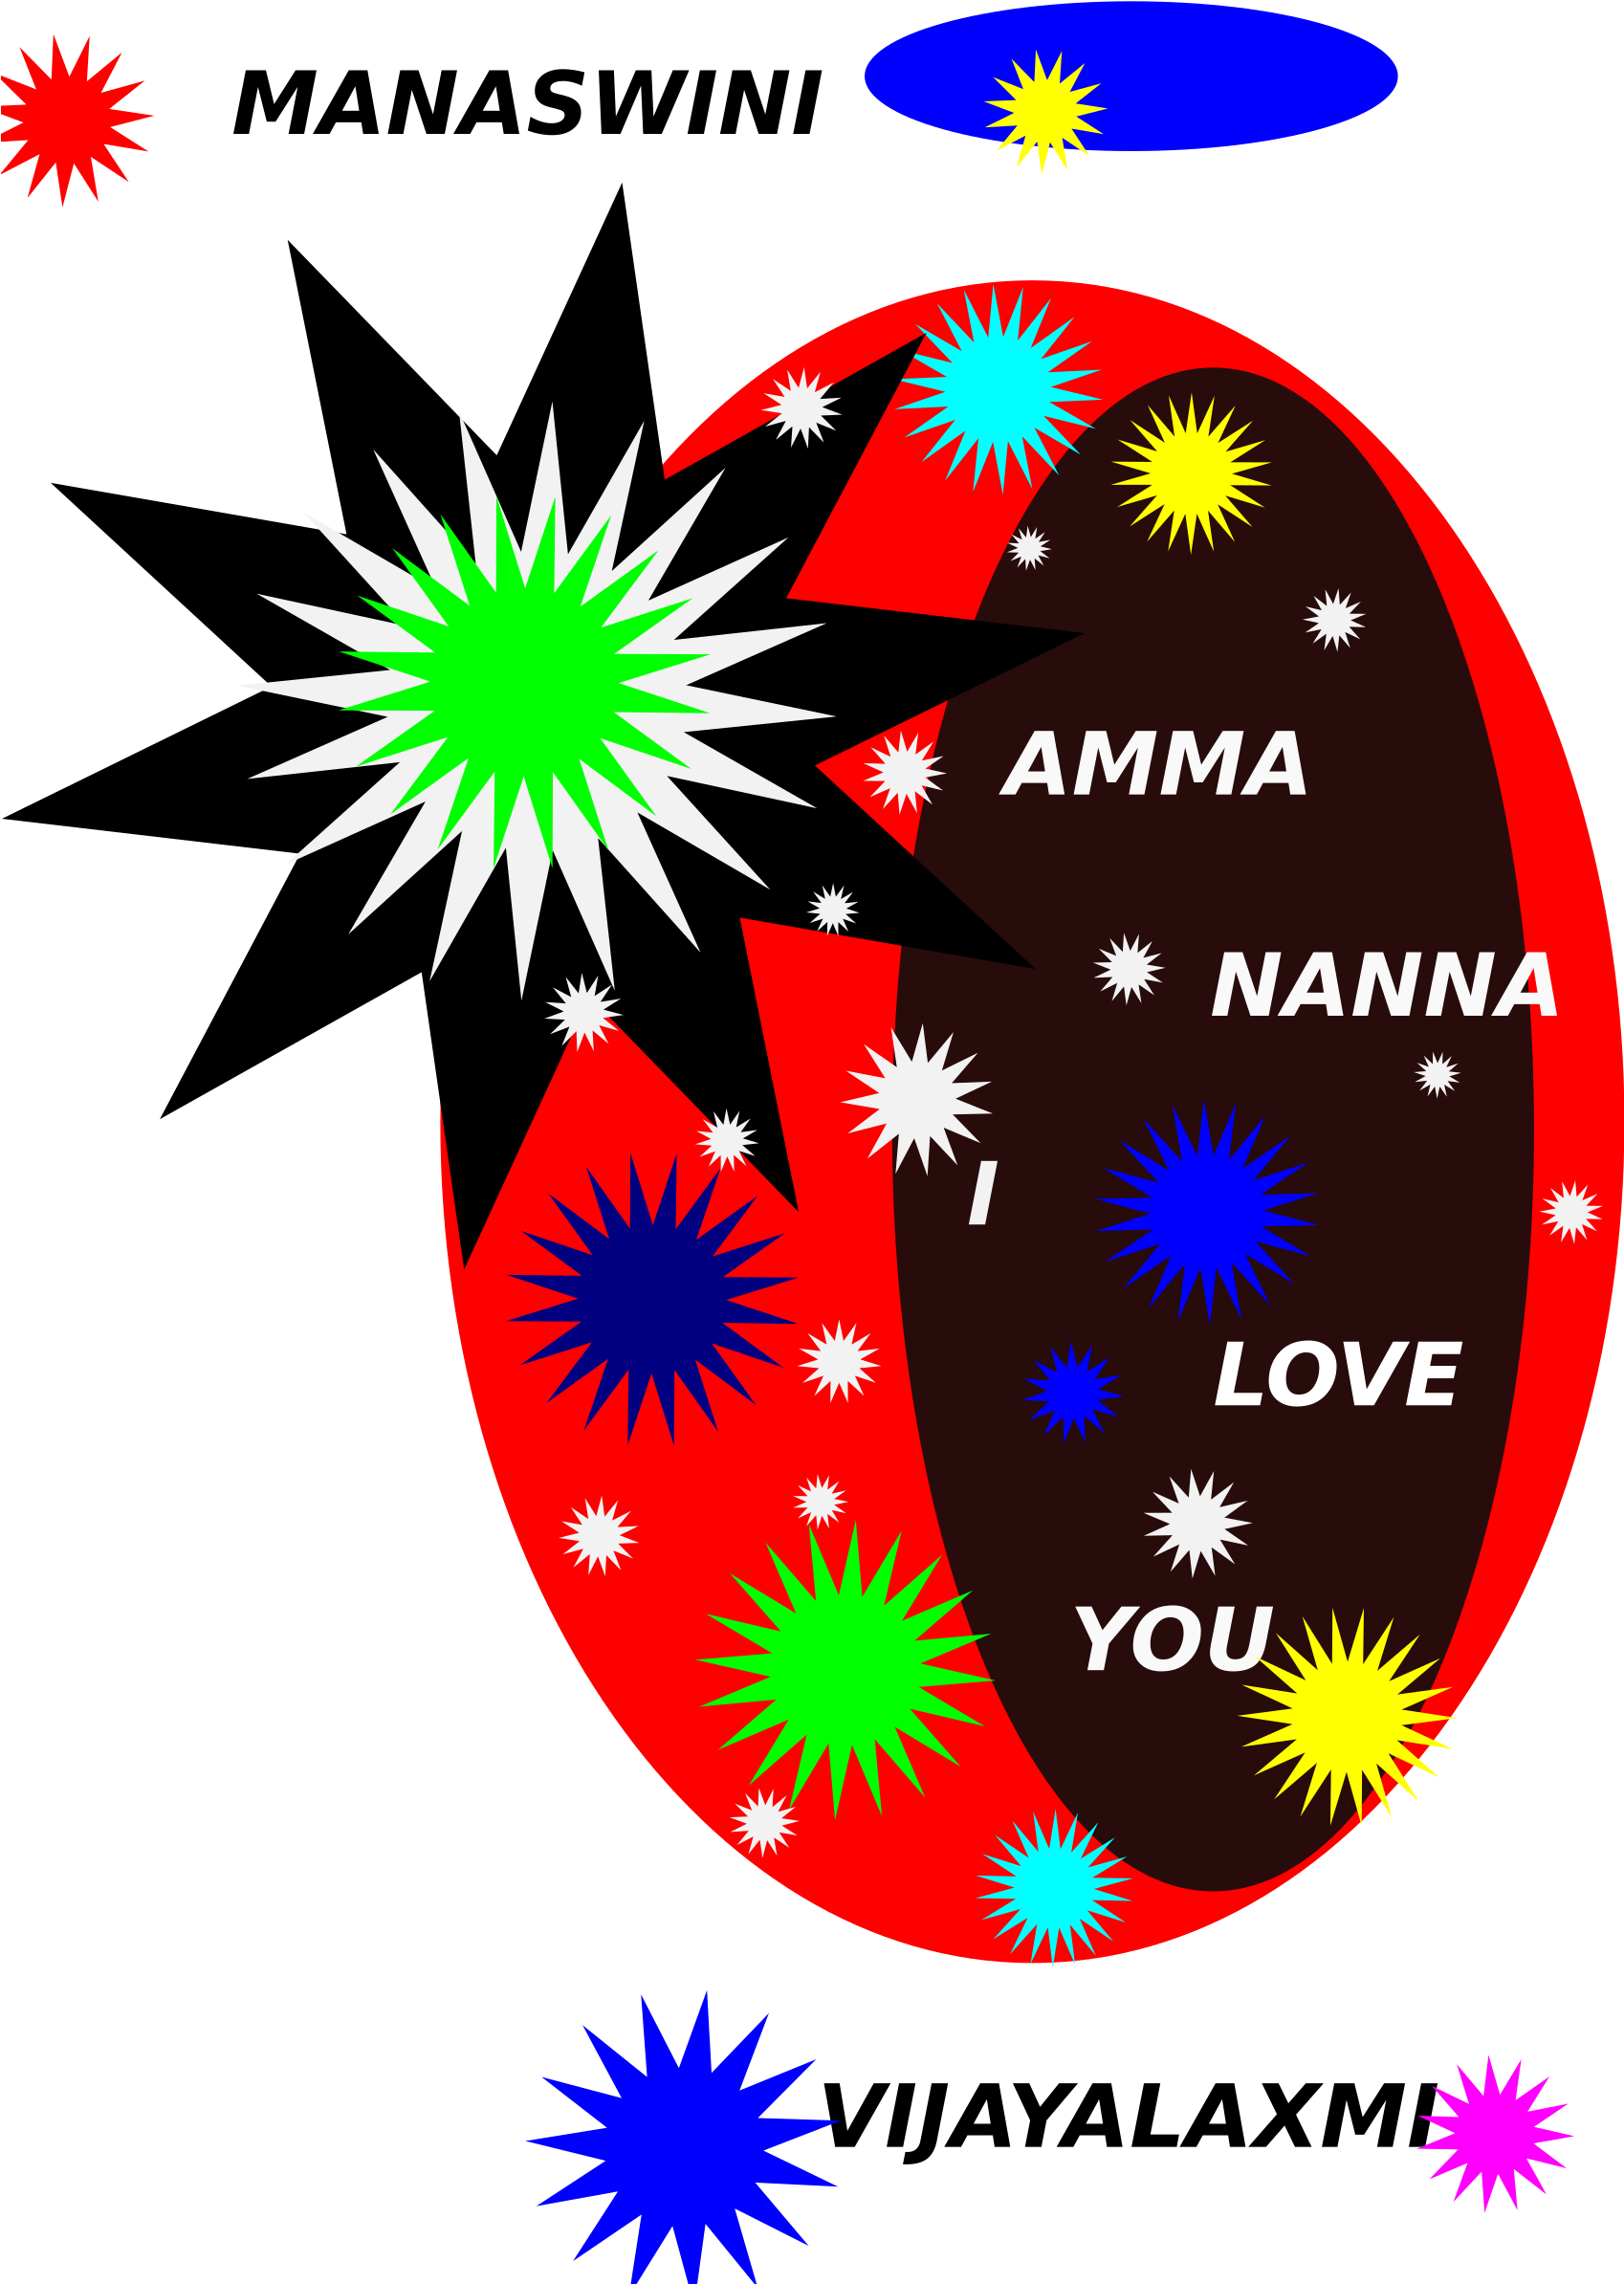 Big Image - Amma Nanna (1697x2400)